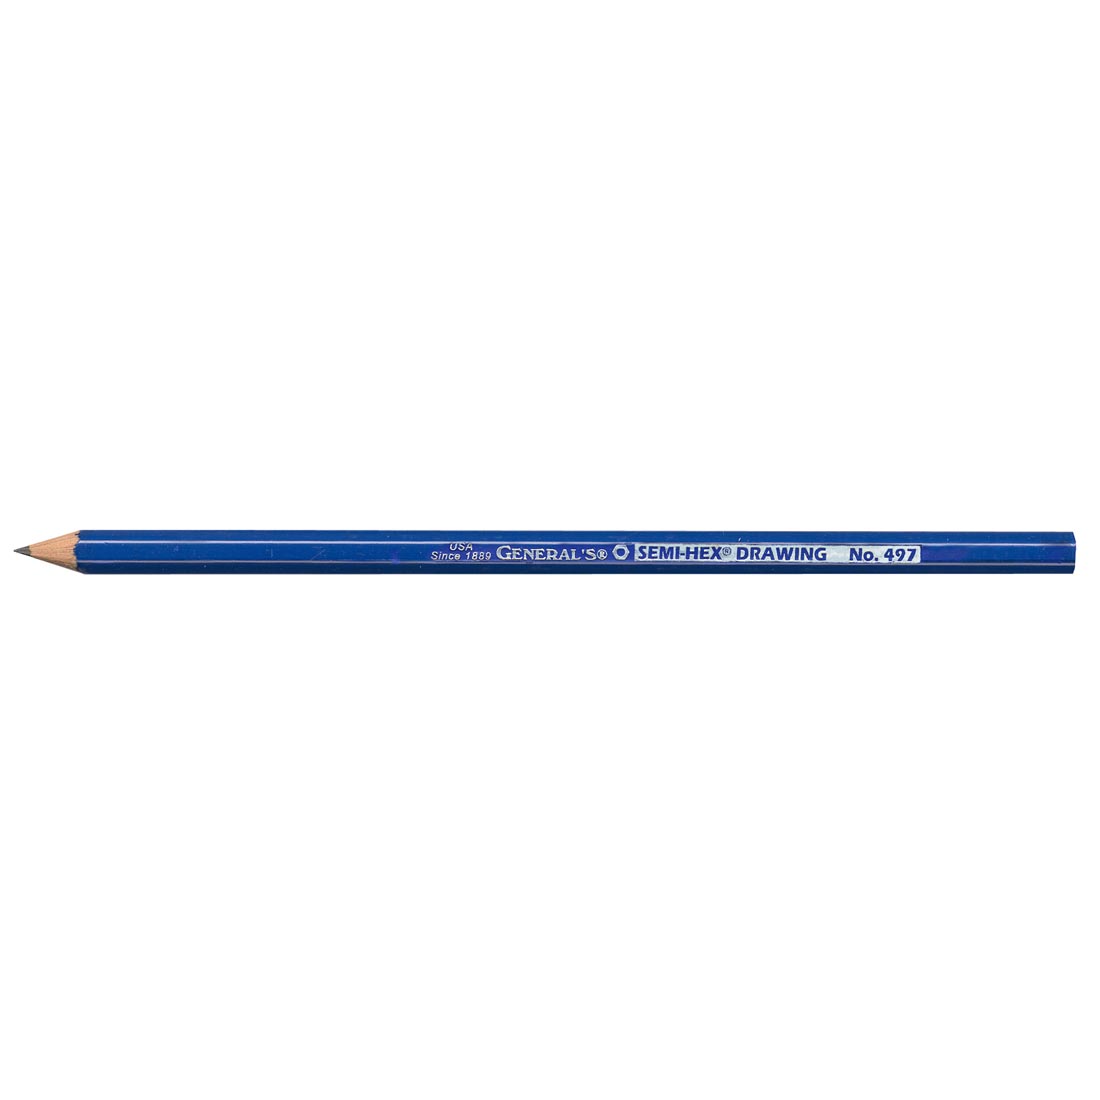 General's Semi-Hex Drawing Pencil 3B